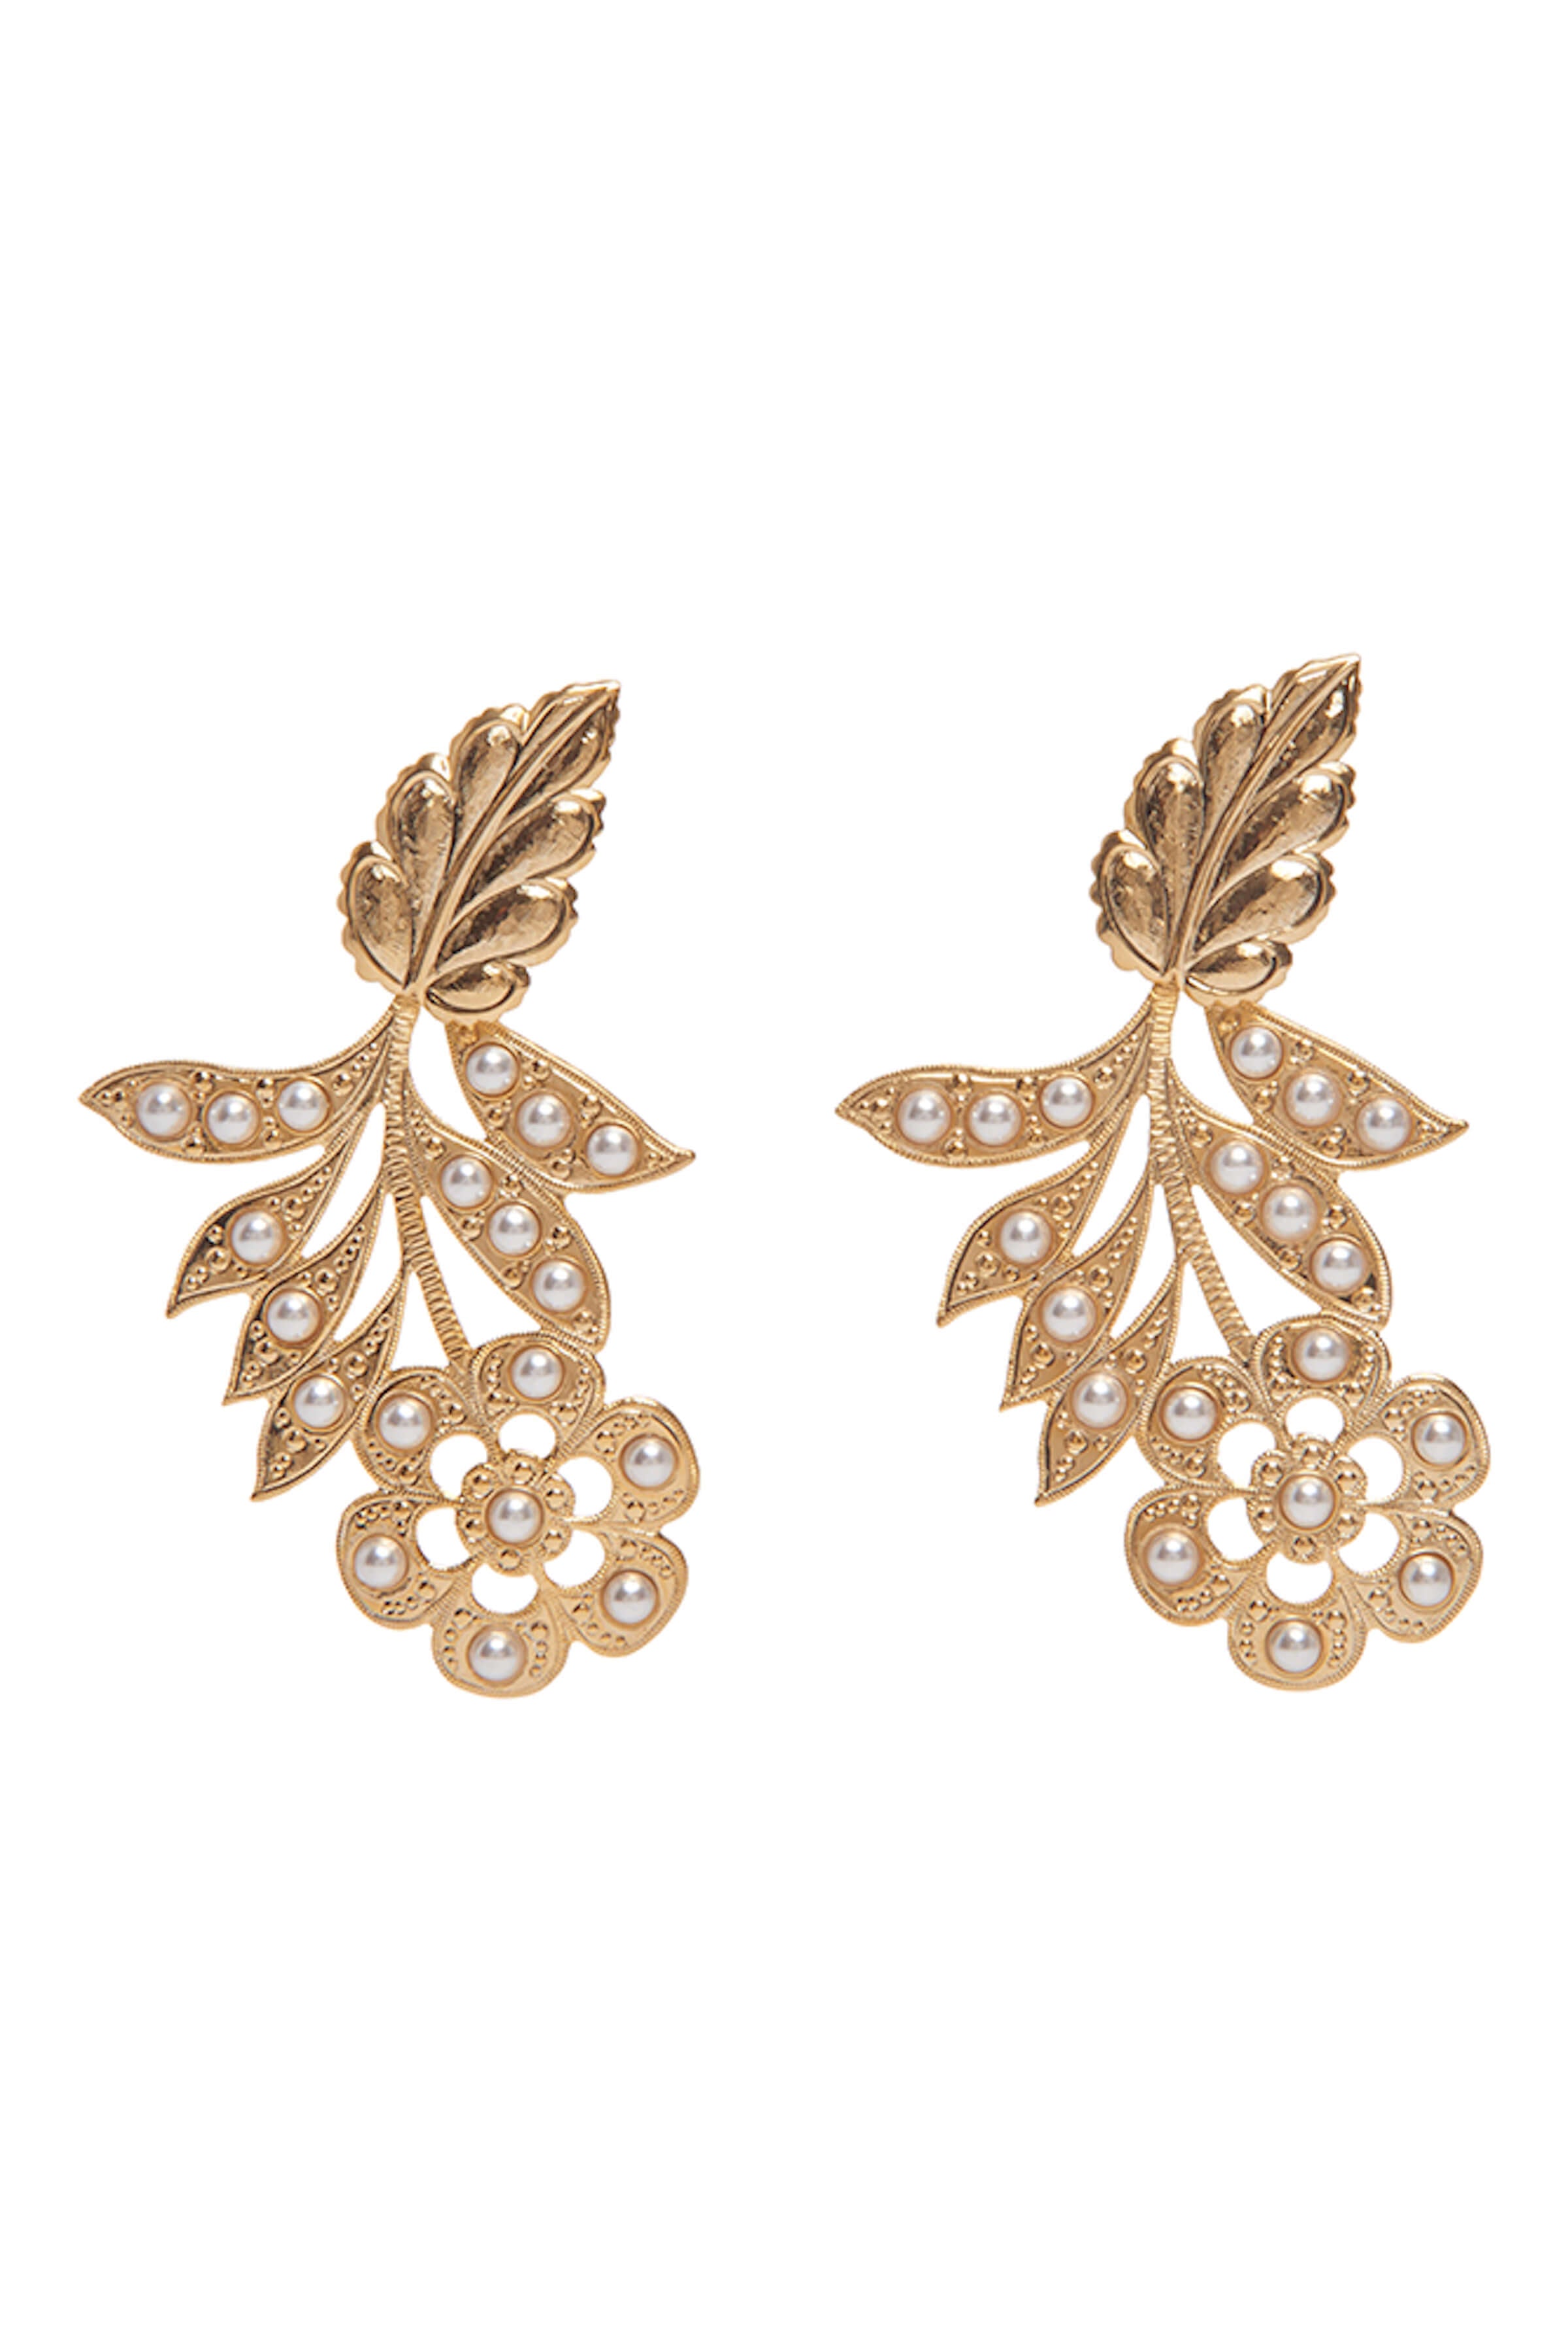 Buy AYESHA Ethnic Gold-Toned Oxidized Short Drop Earrings | Shoppers Stop